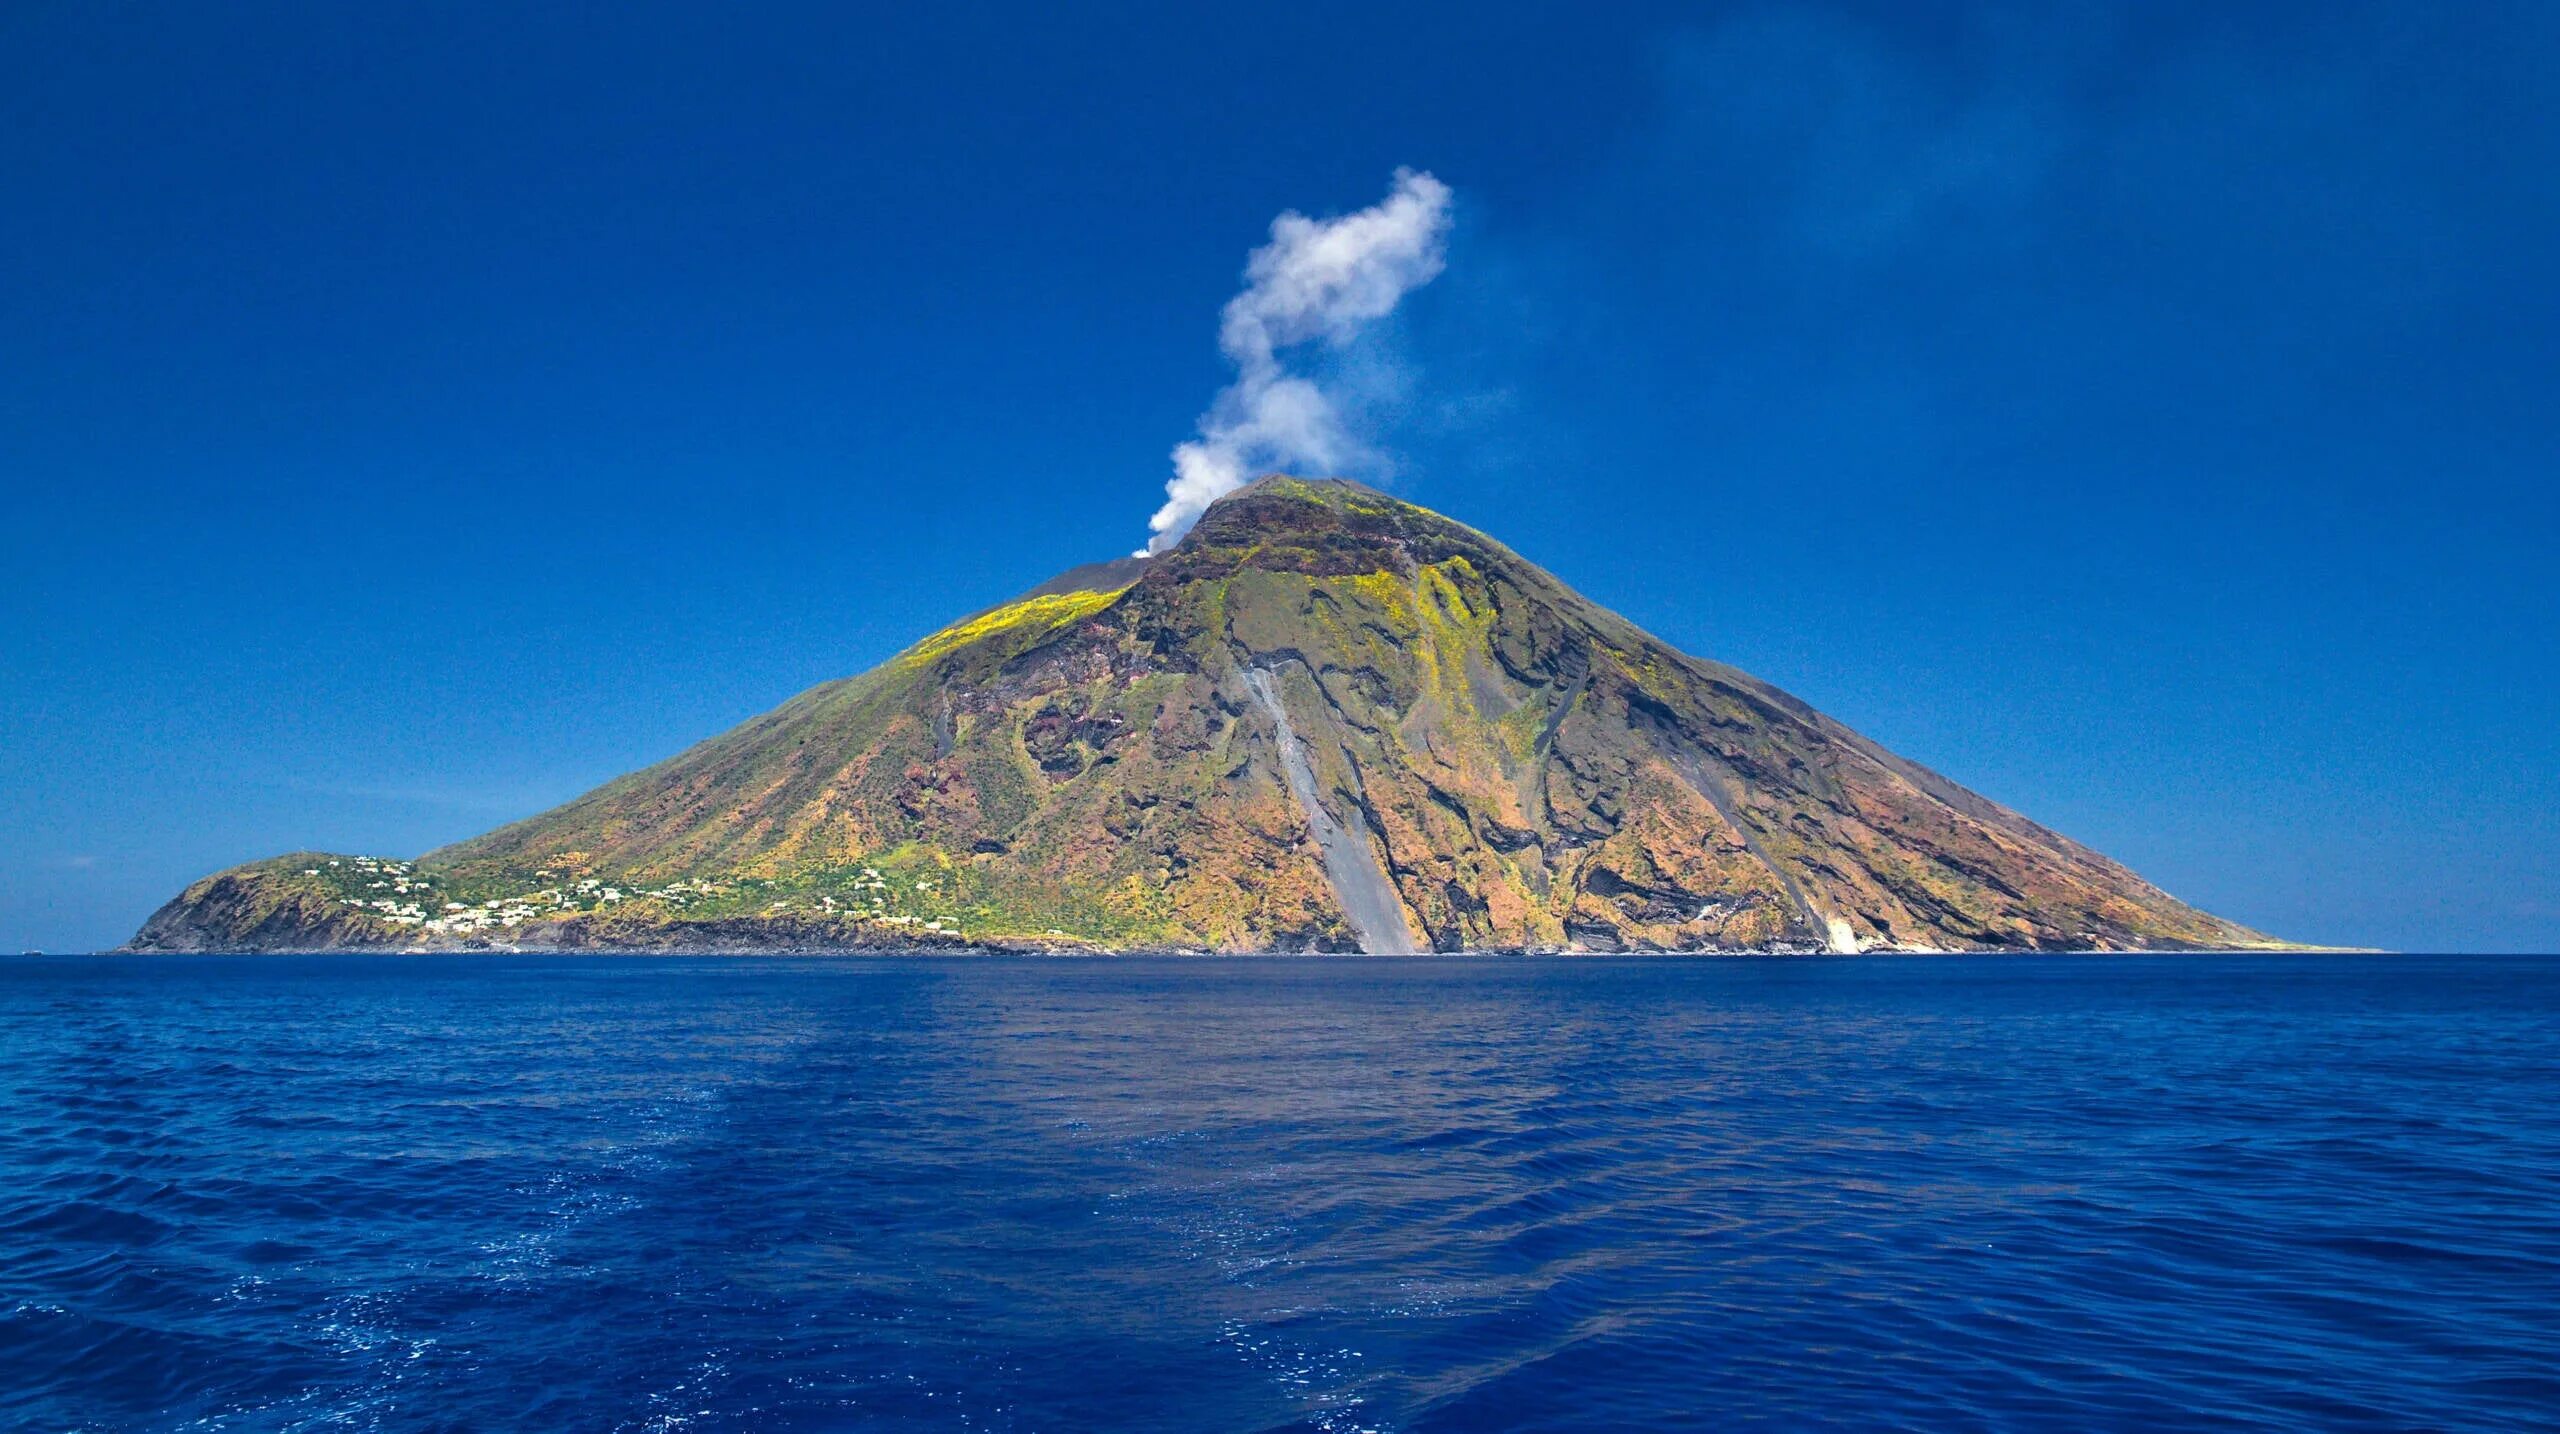 Volcano island. Остров Стромболи Италия. Сицилия остров Стромболи. Стромболи Липарские острова. Остров вулкан Стромболи.